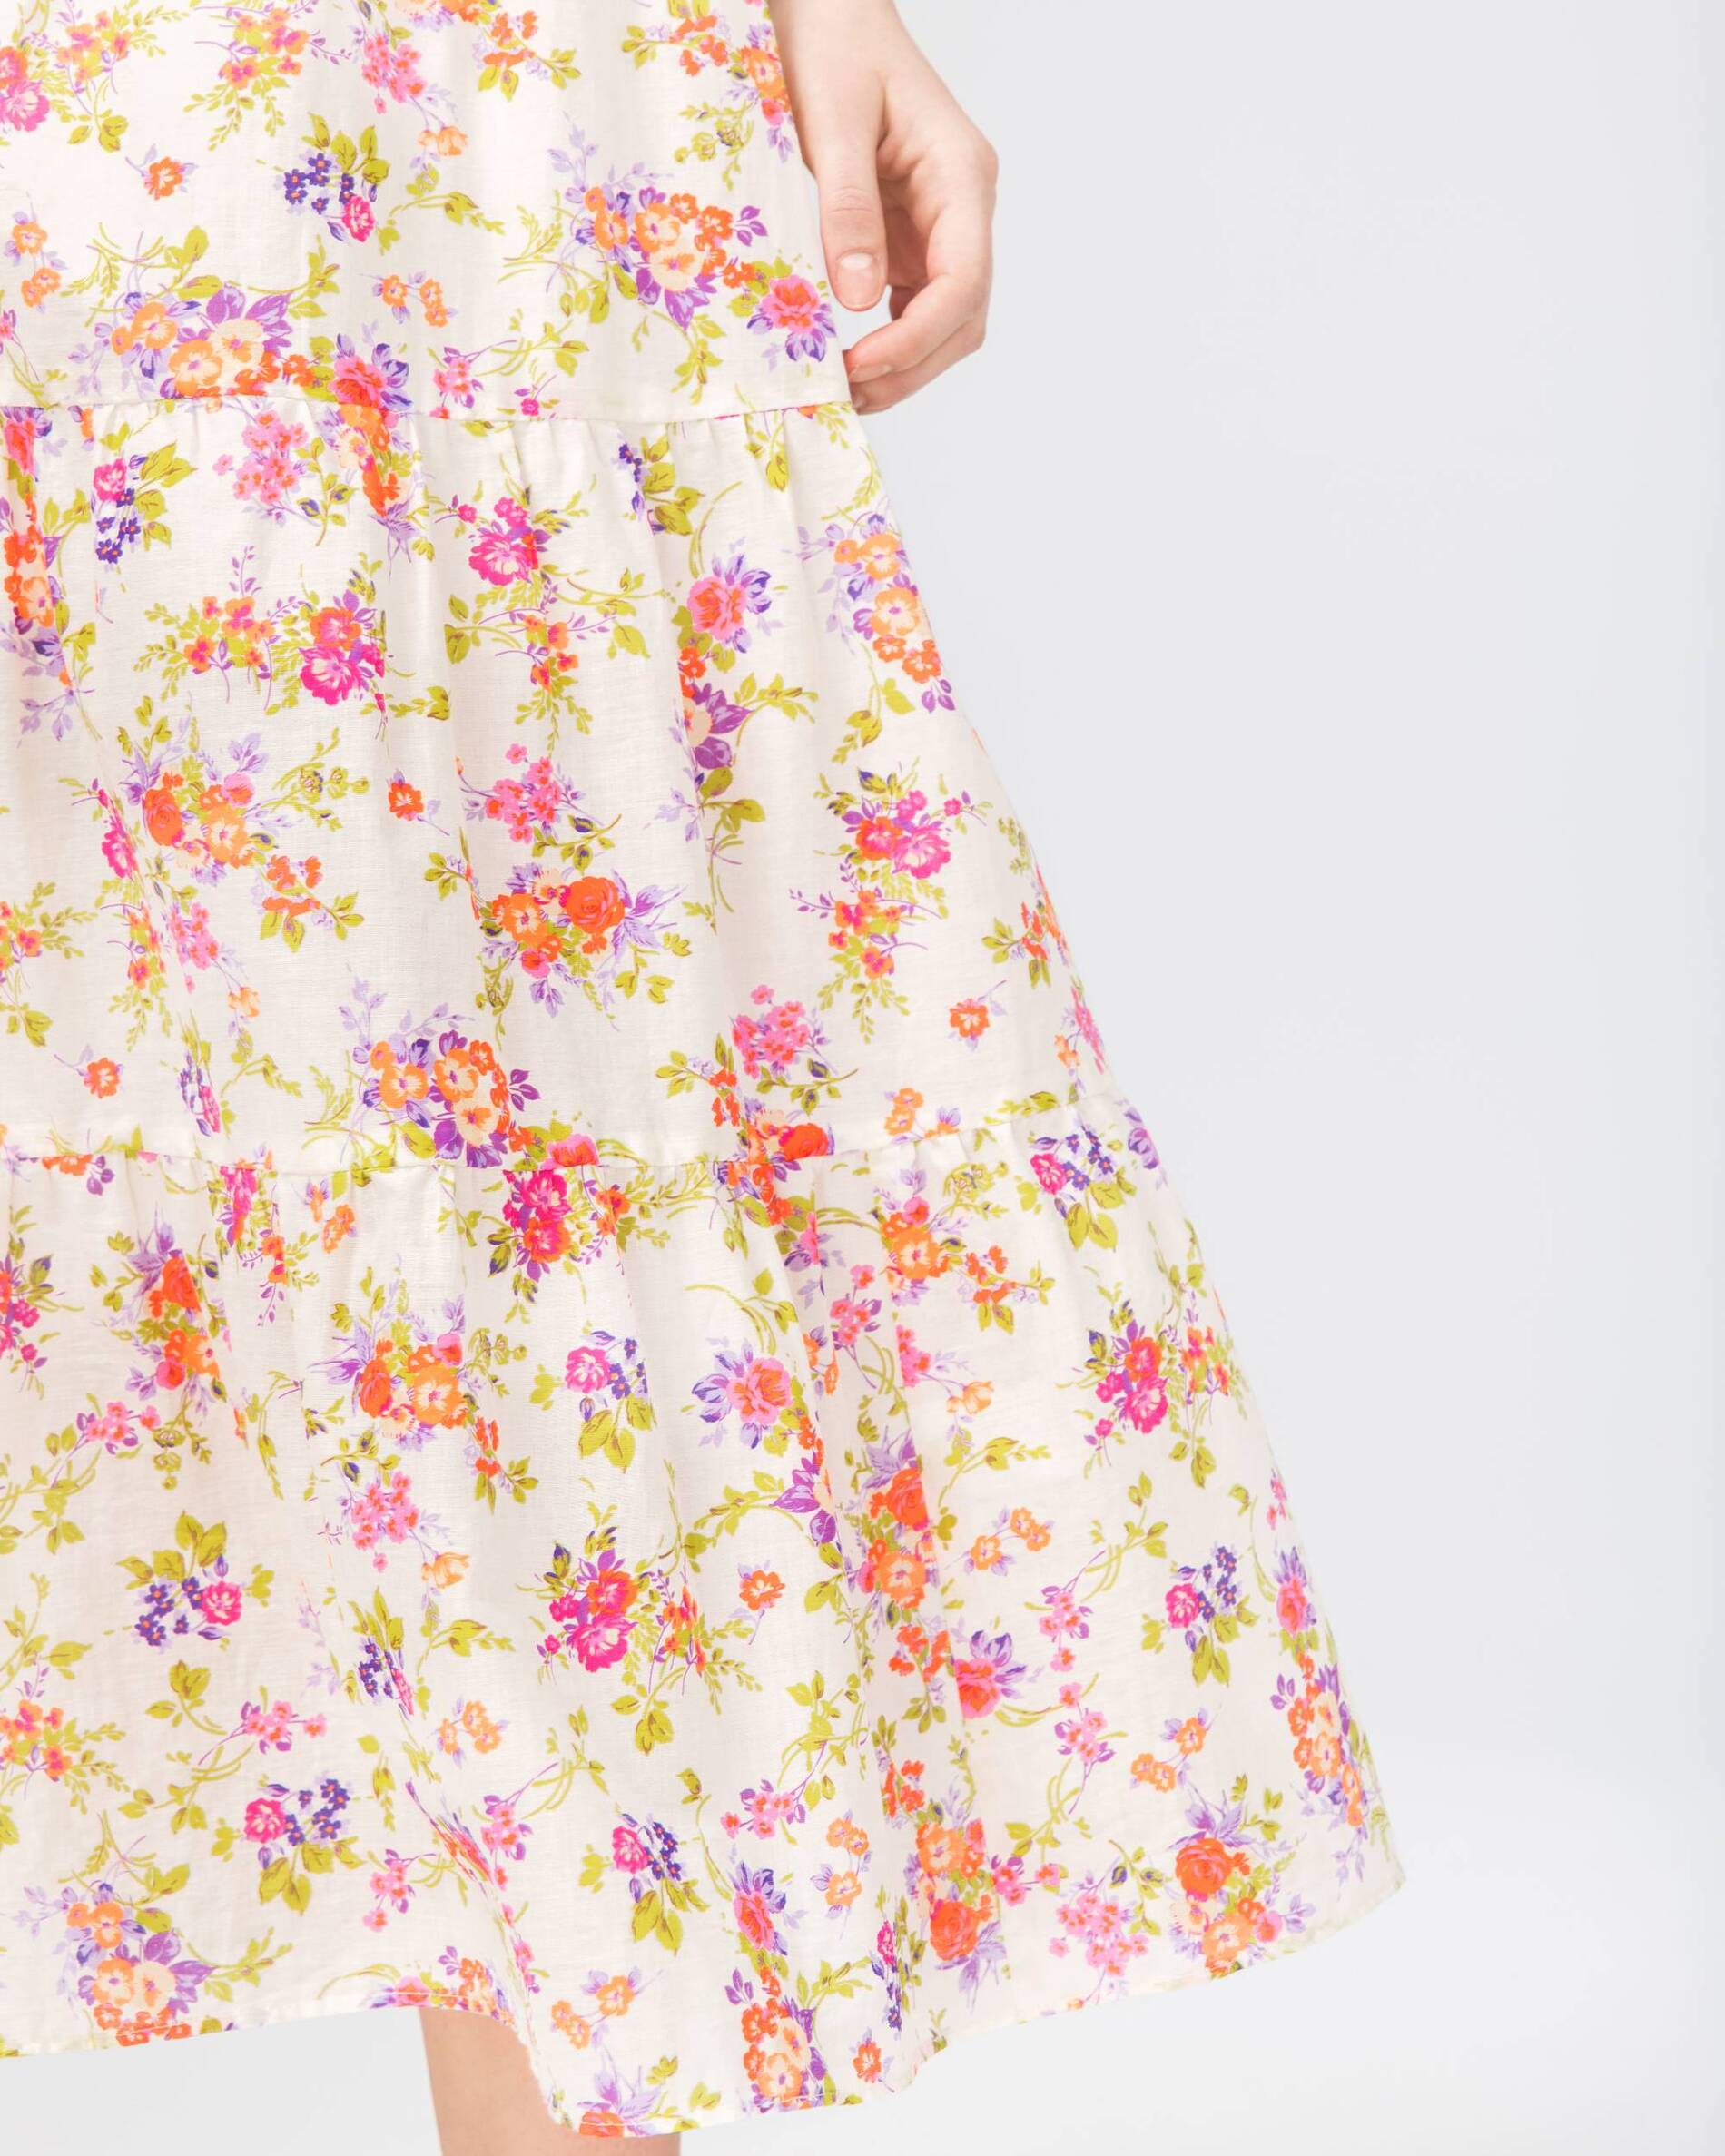 Floral print sheath dress